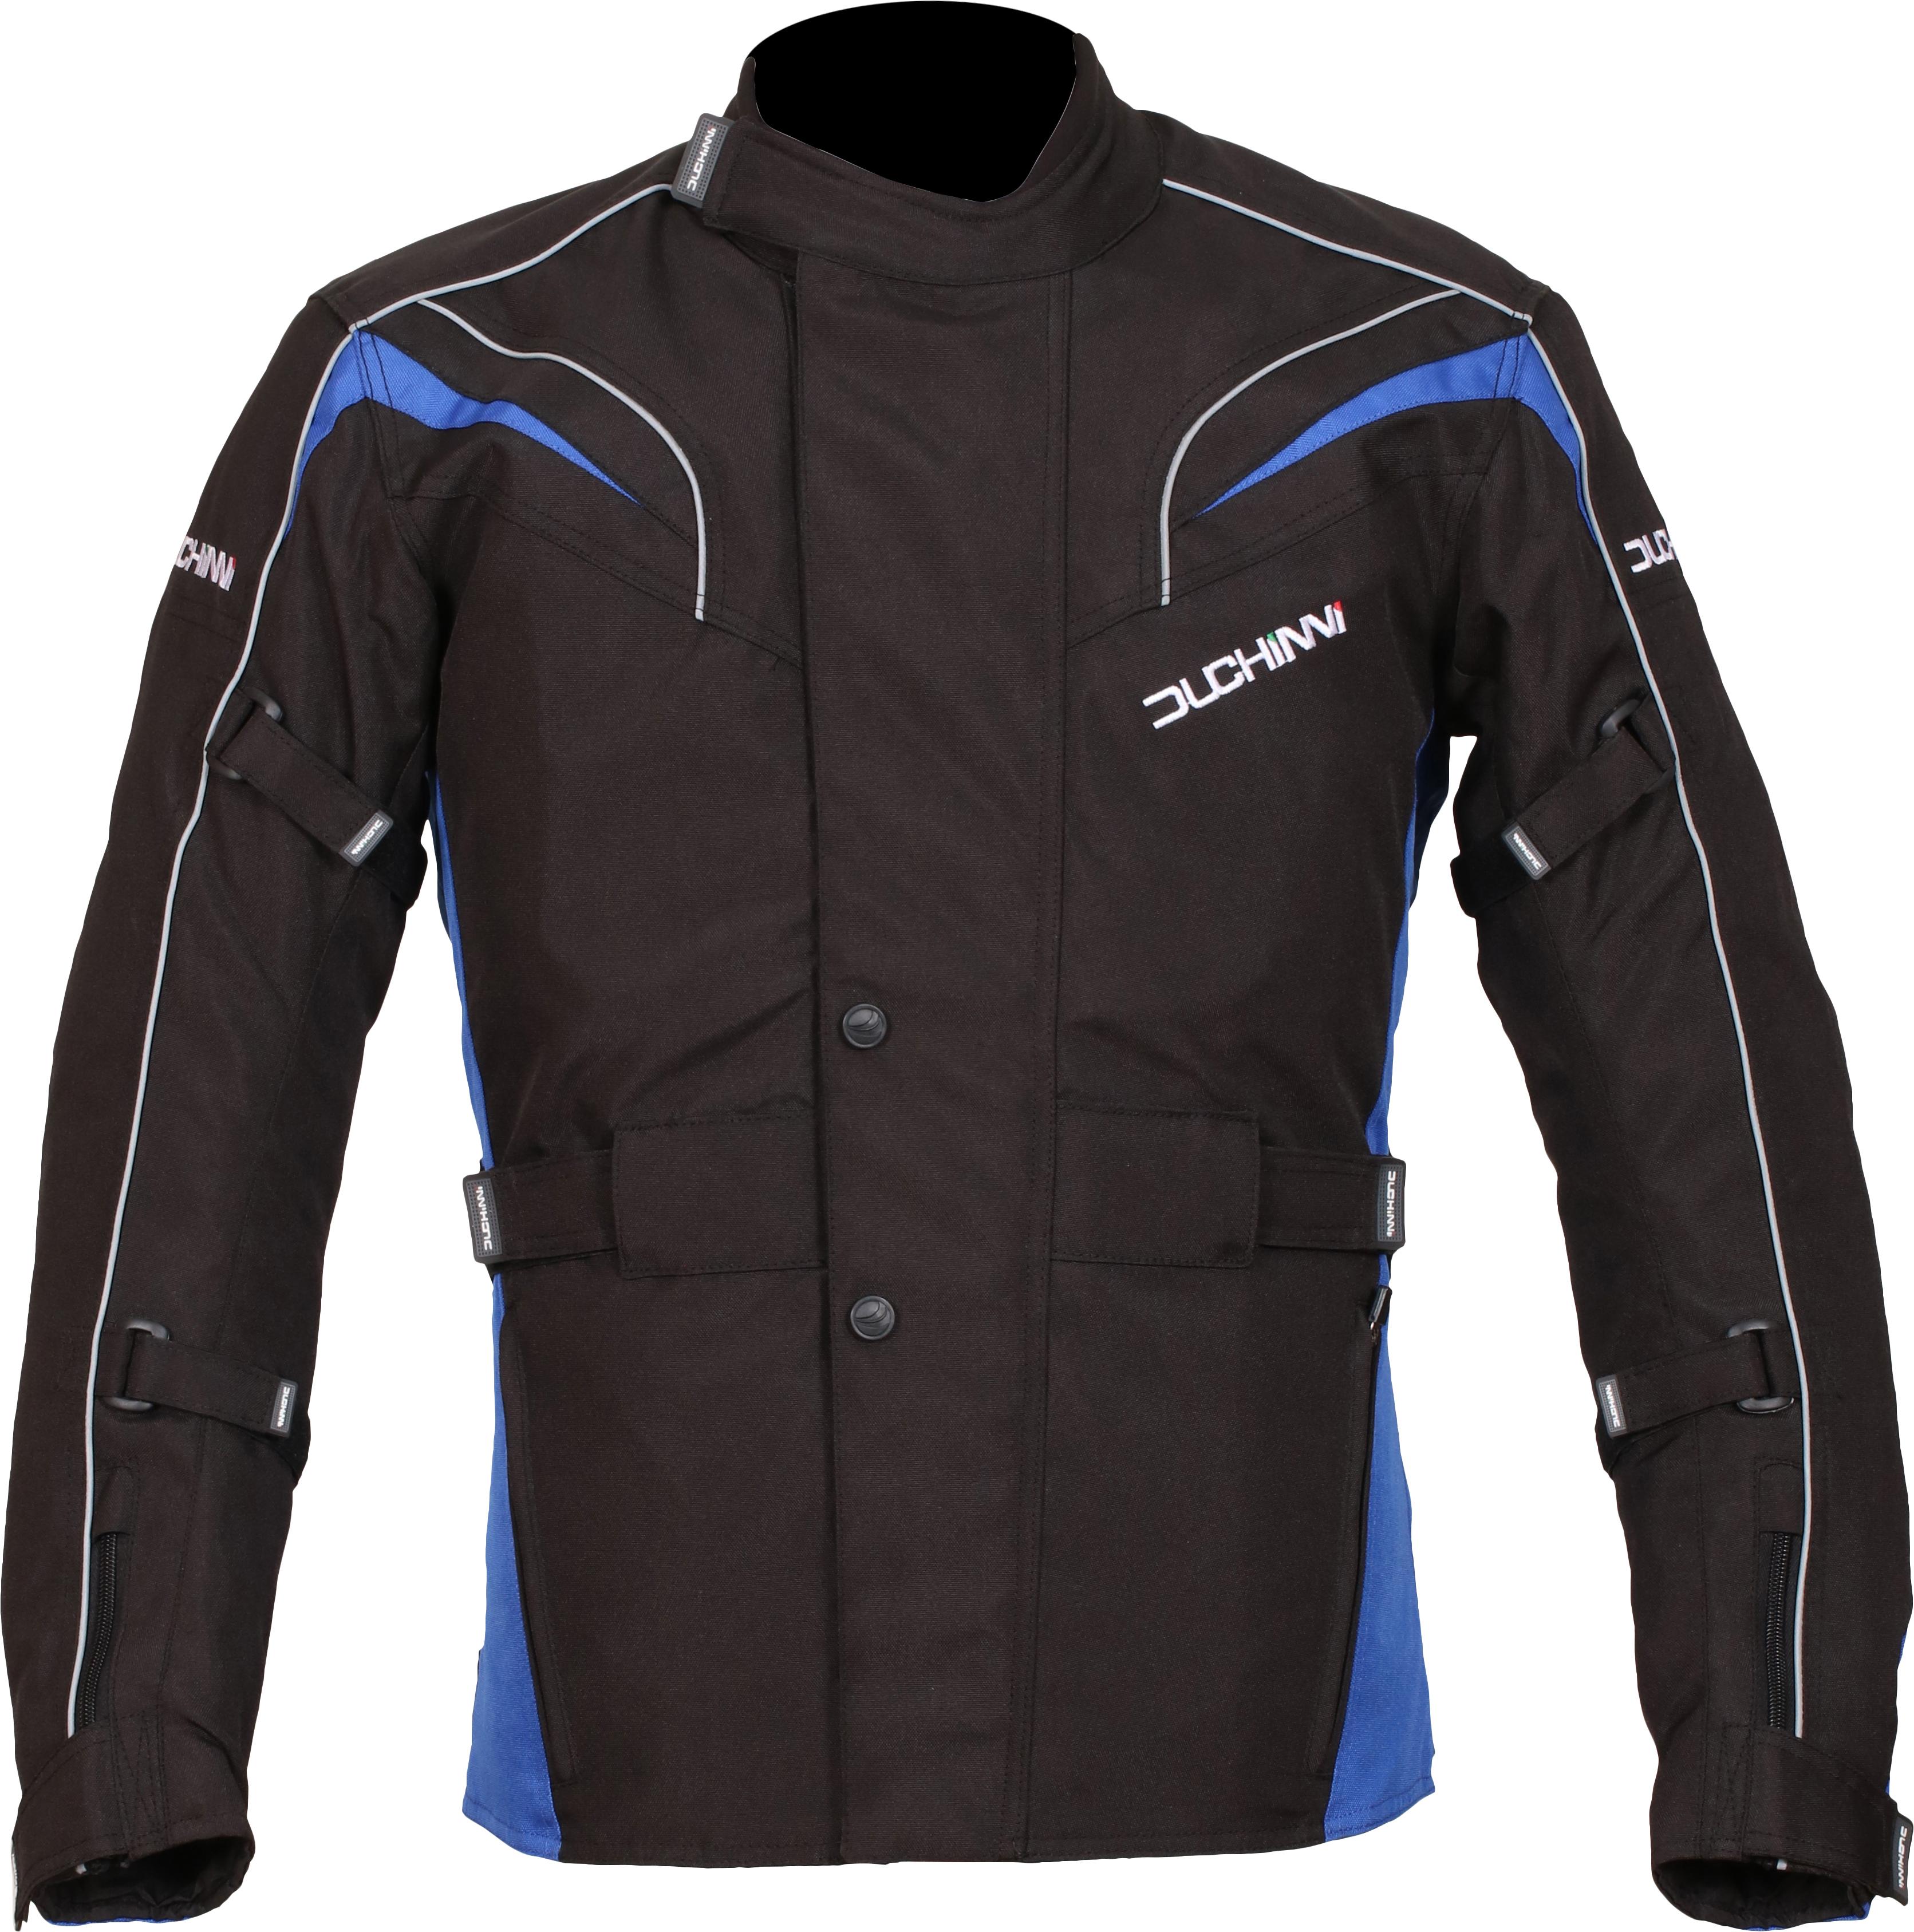 Duchinni Hurricane Motorcycle Jacket - Black And Blue, 2Xl